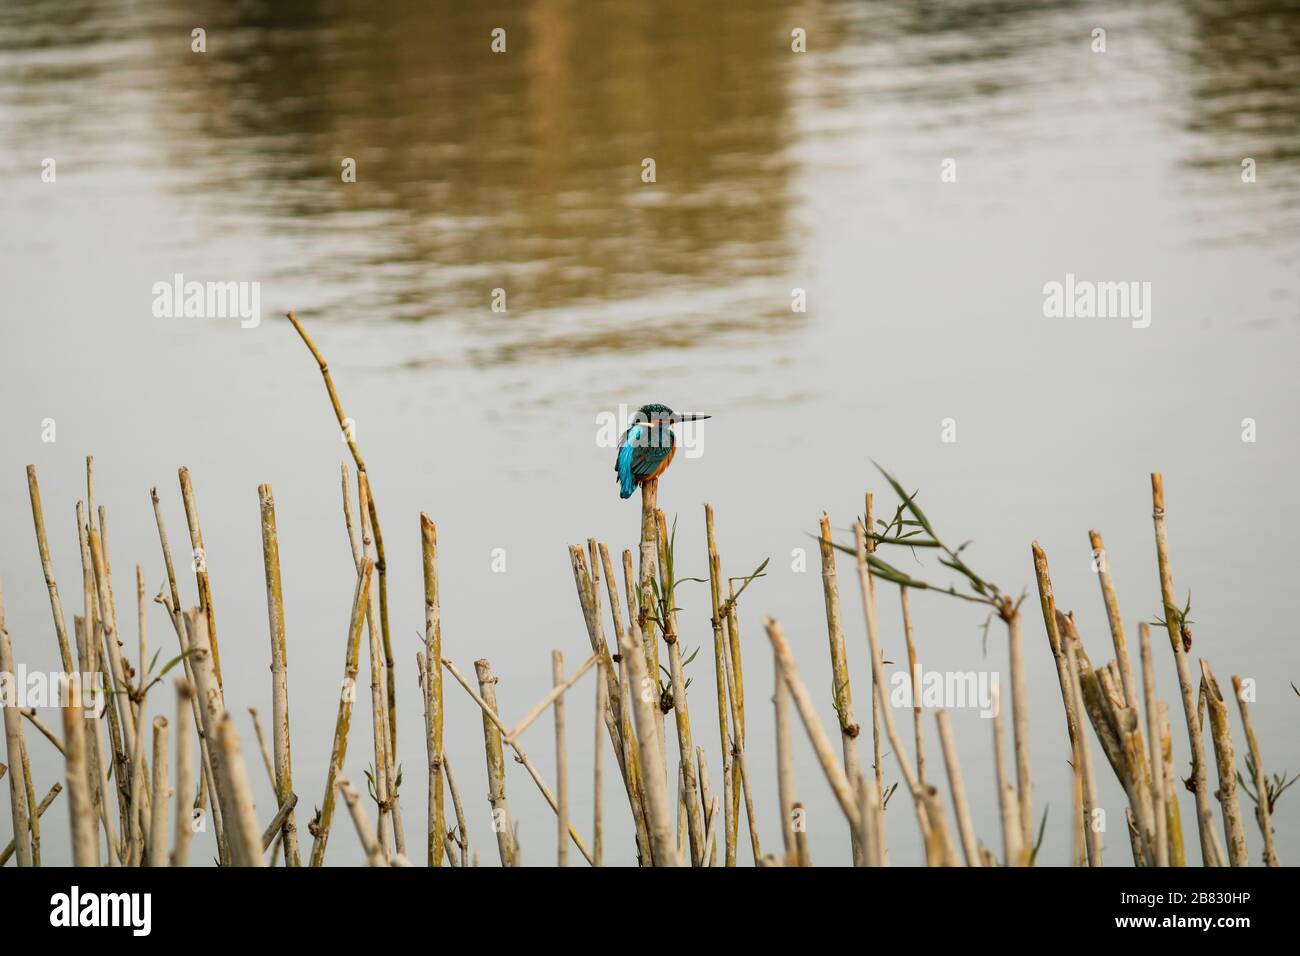 Kingfisher sitting on bamboo sticks at lake side Stock Photo